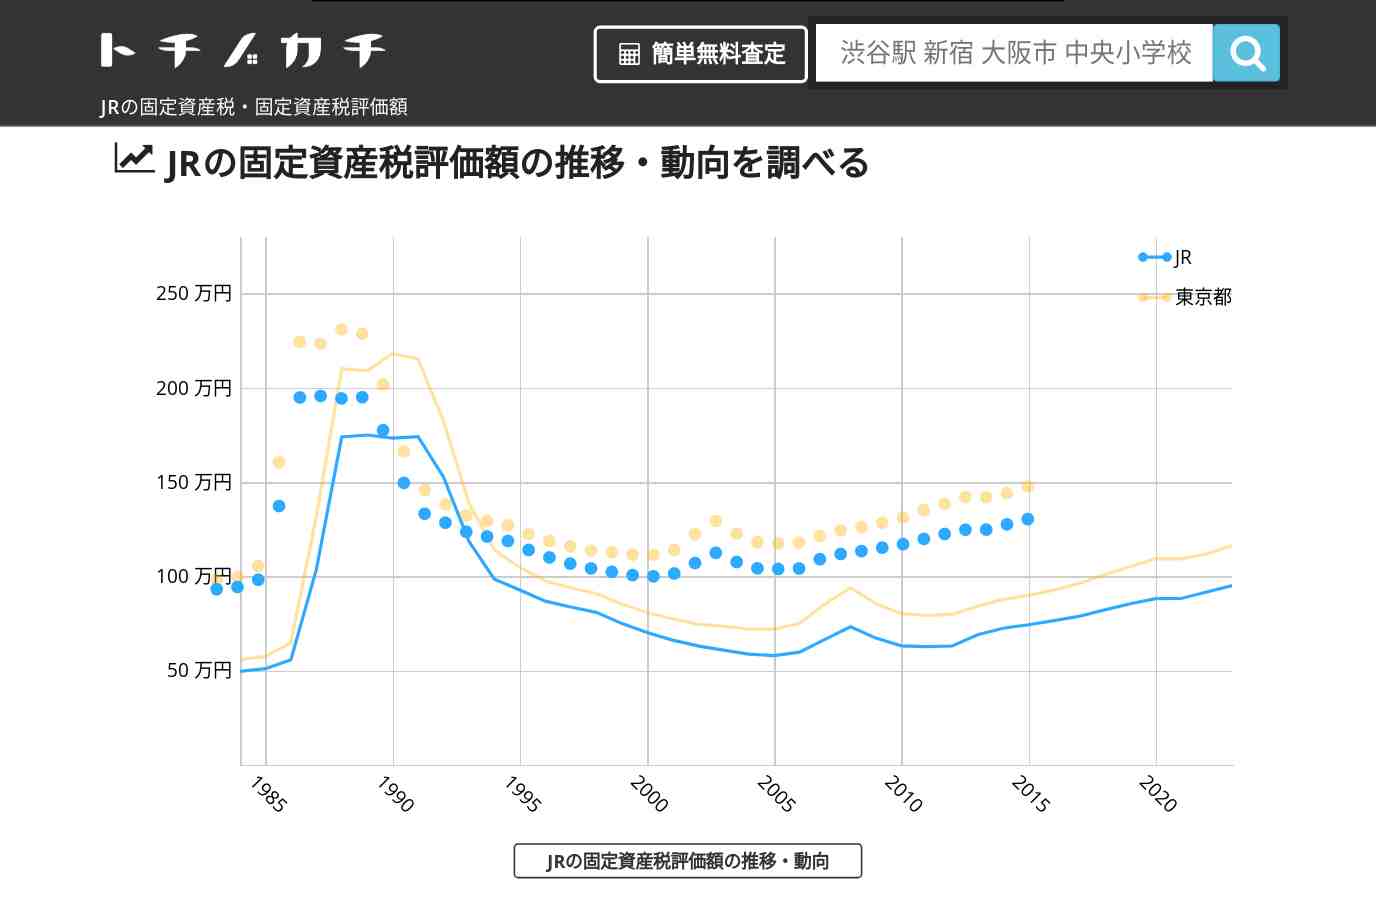 JR(東京都)の固定資産税・固定資産税評価額 | トチノカチ